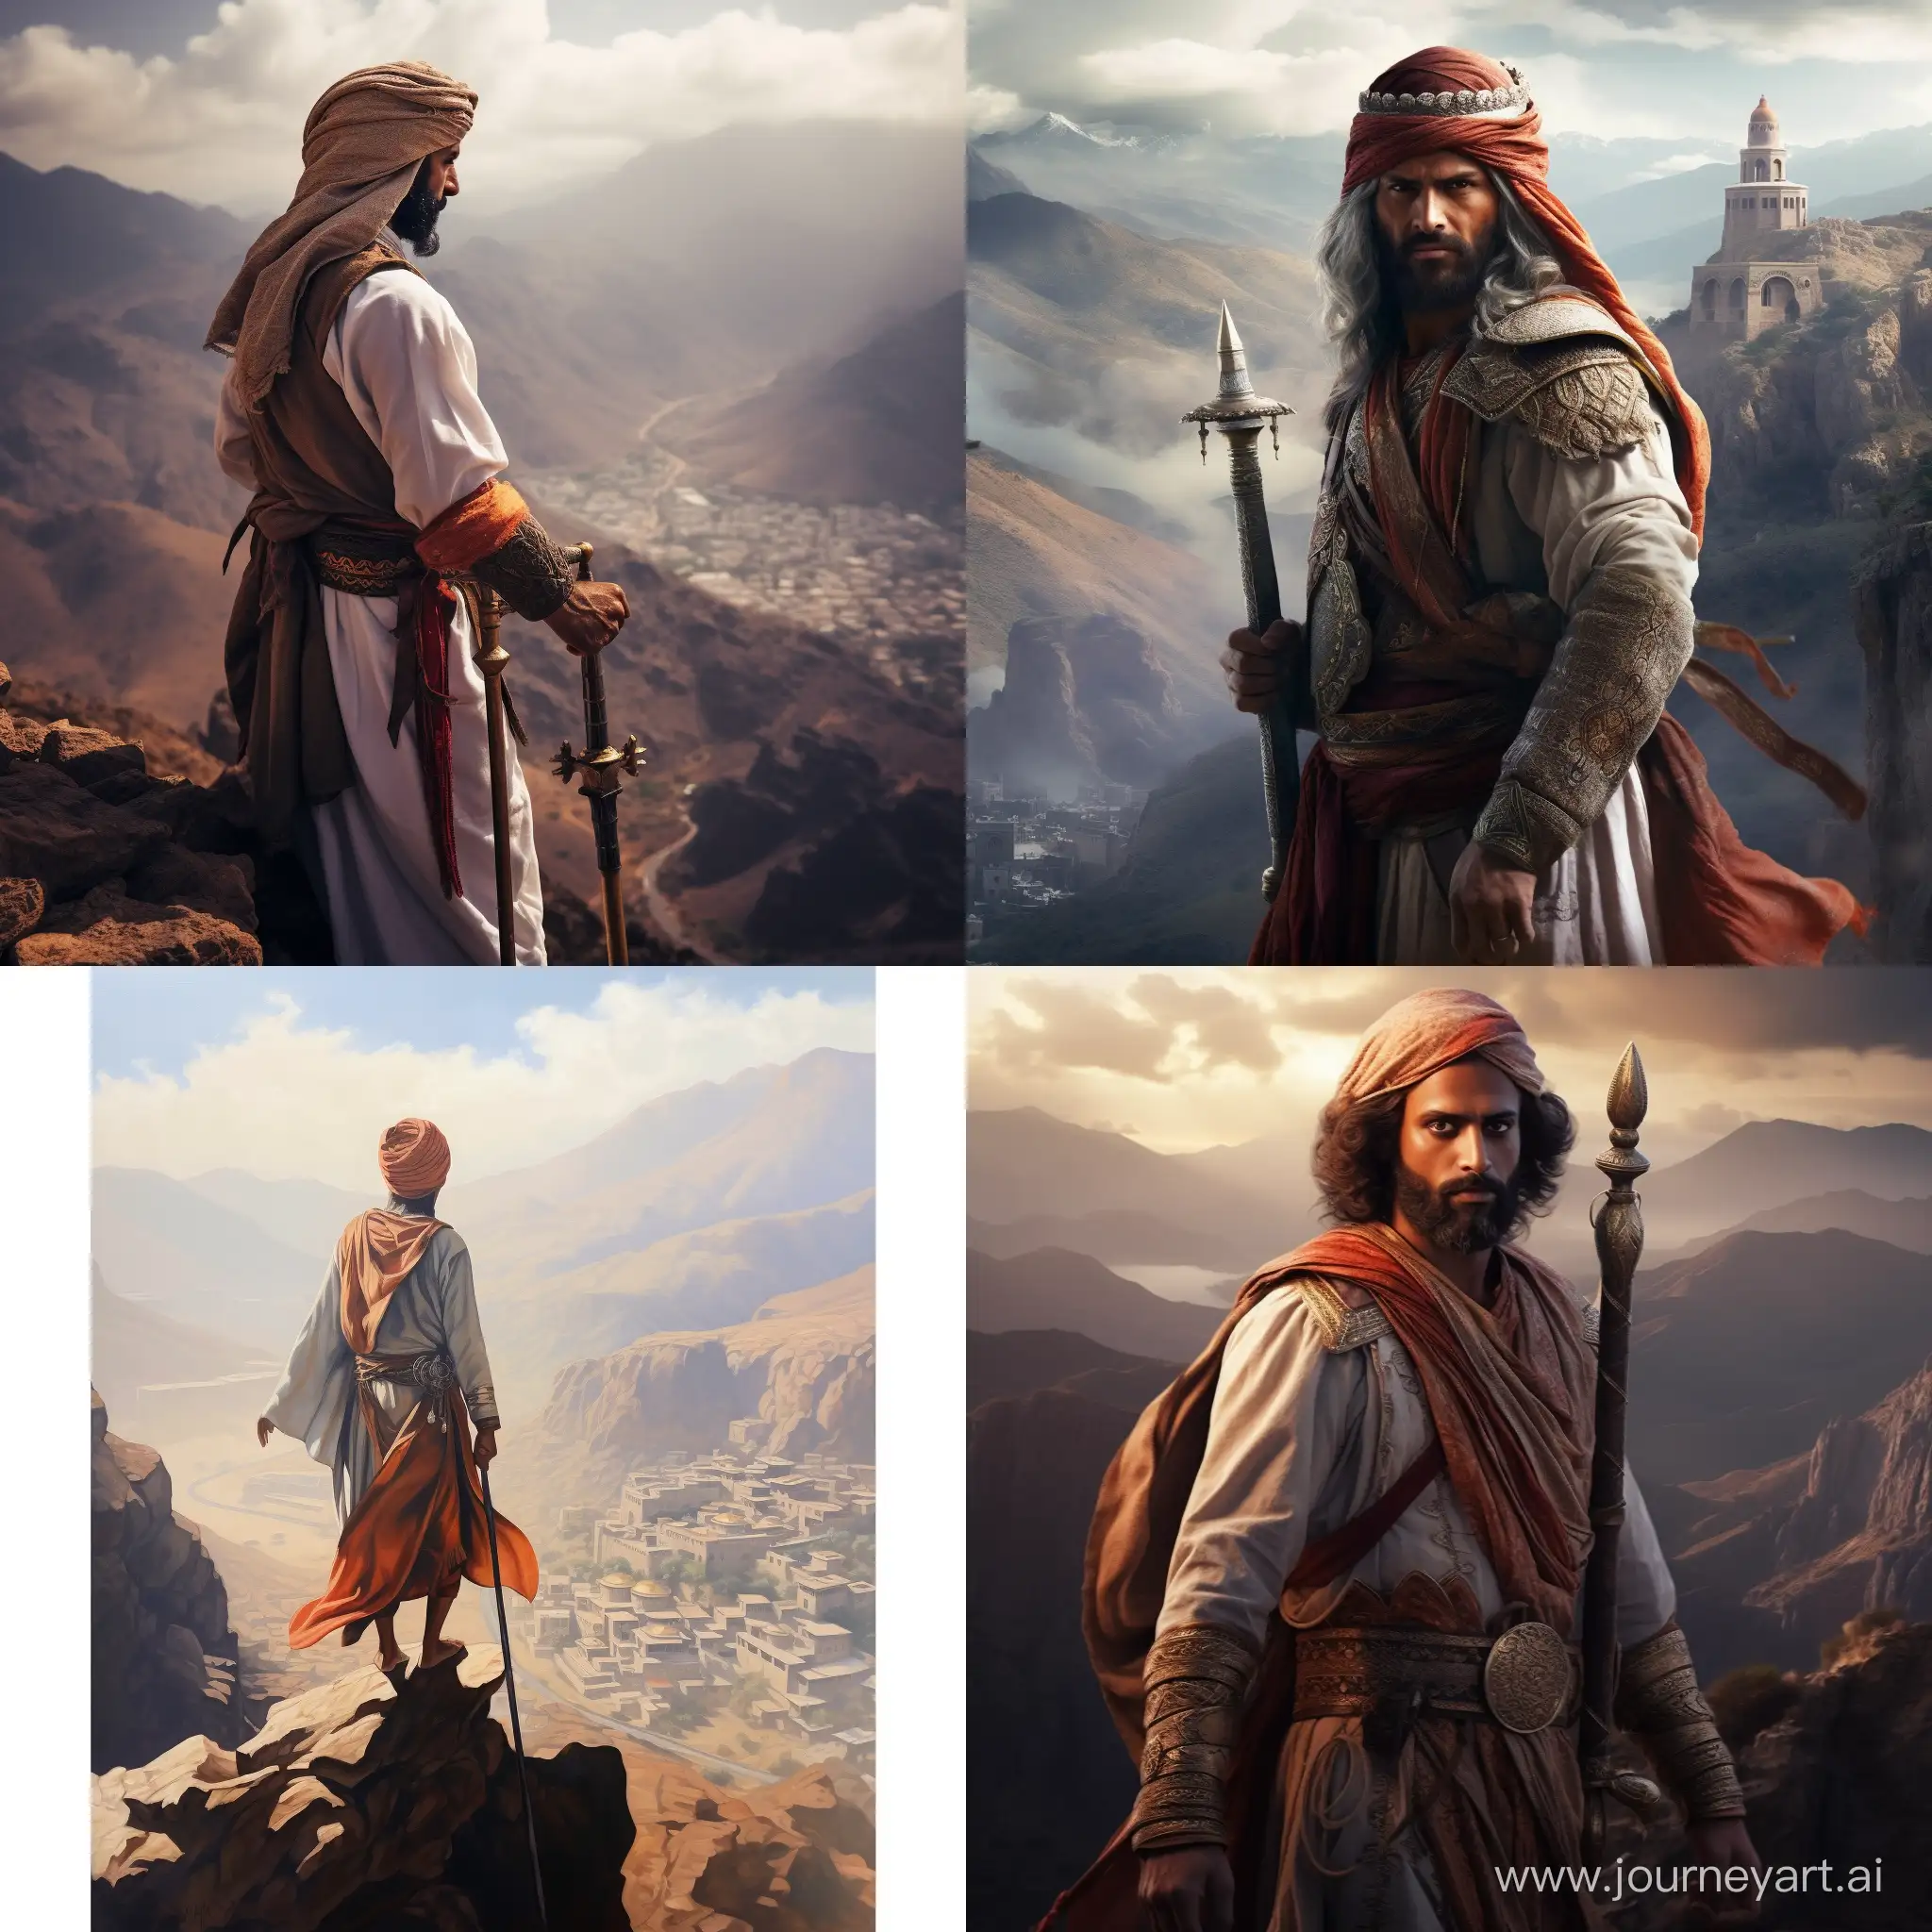 Courageous-Omani-Warrior-Overseeing-Ancient-Mountain-Village